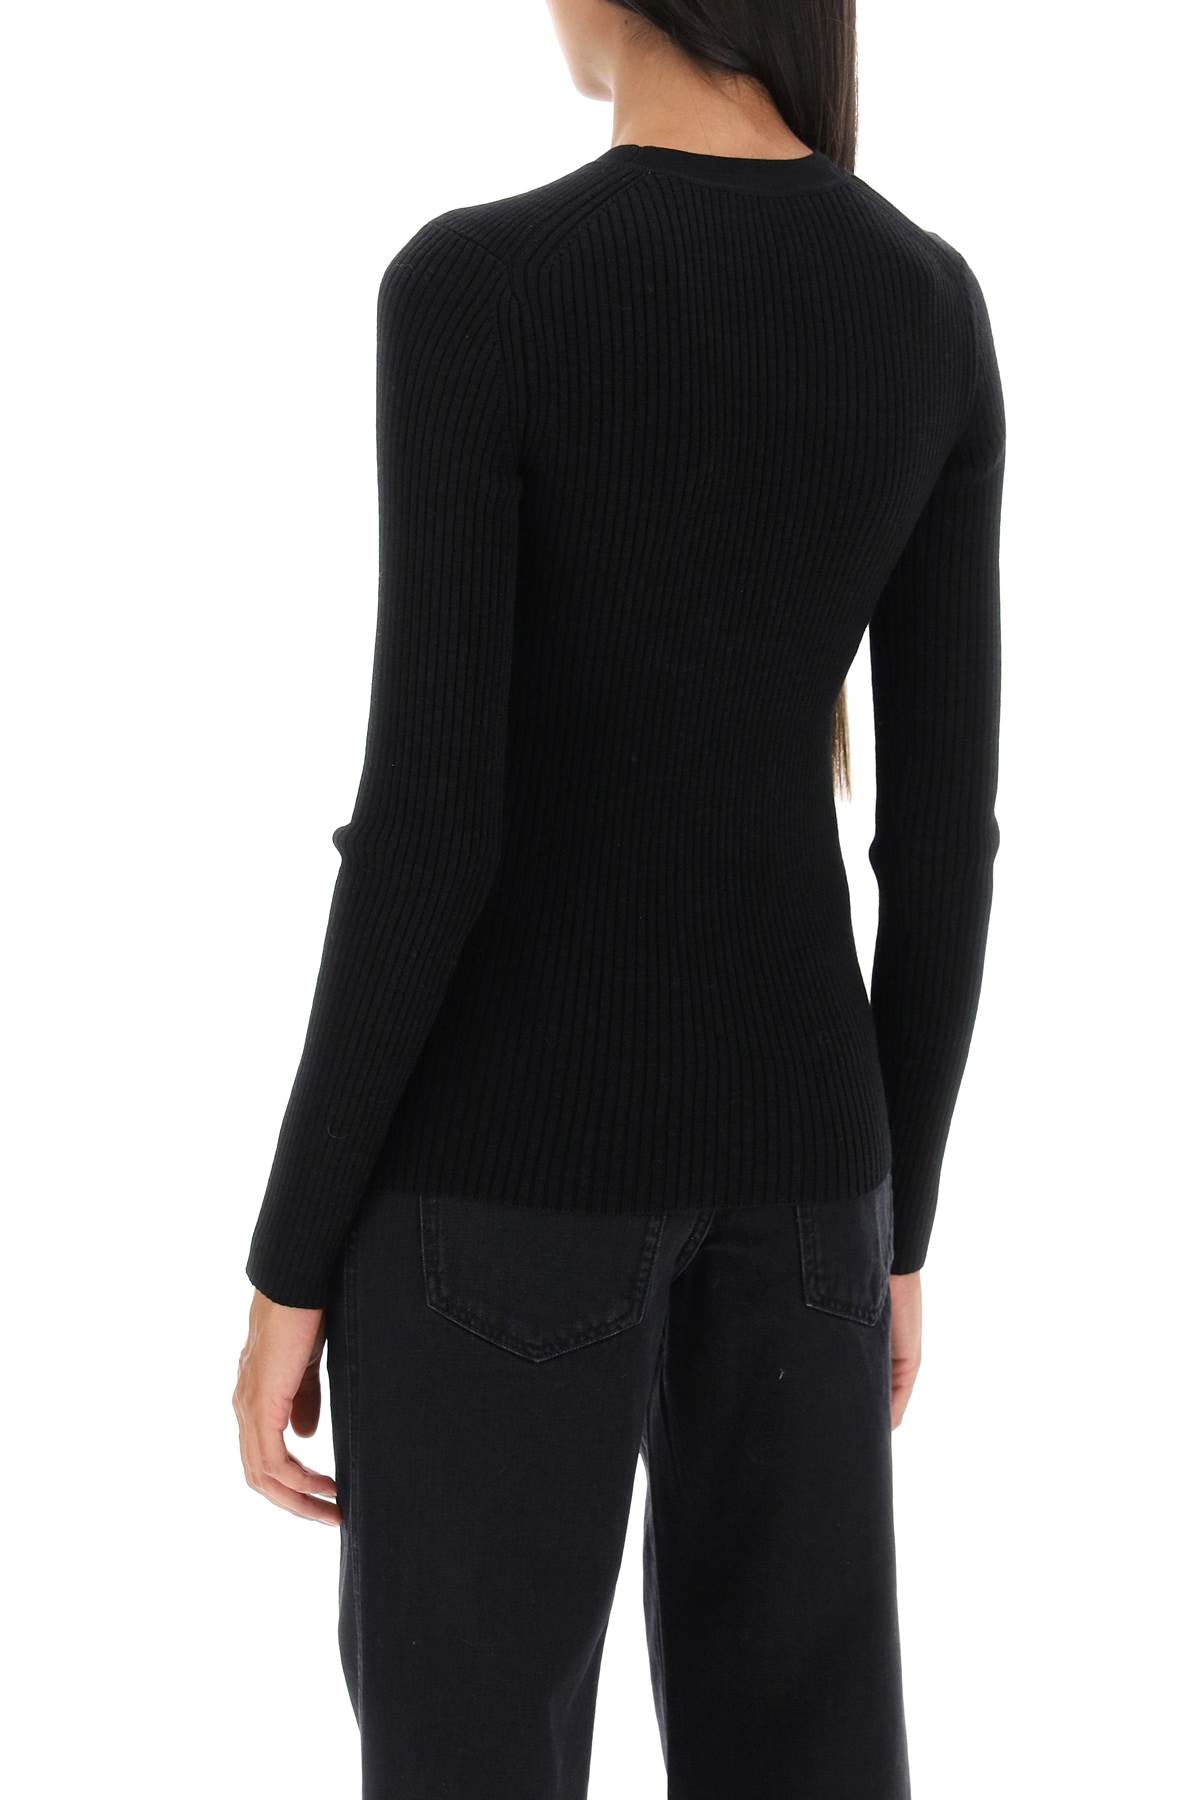 Stylish Black Knit Sweater for Women - FW23